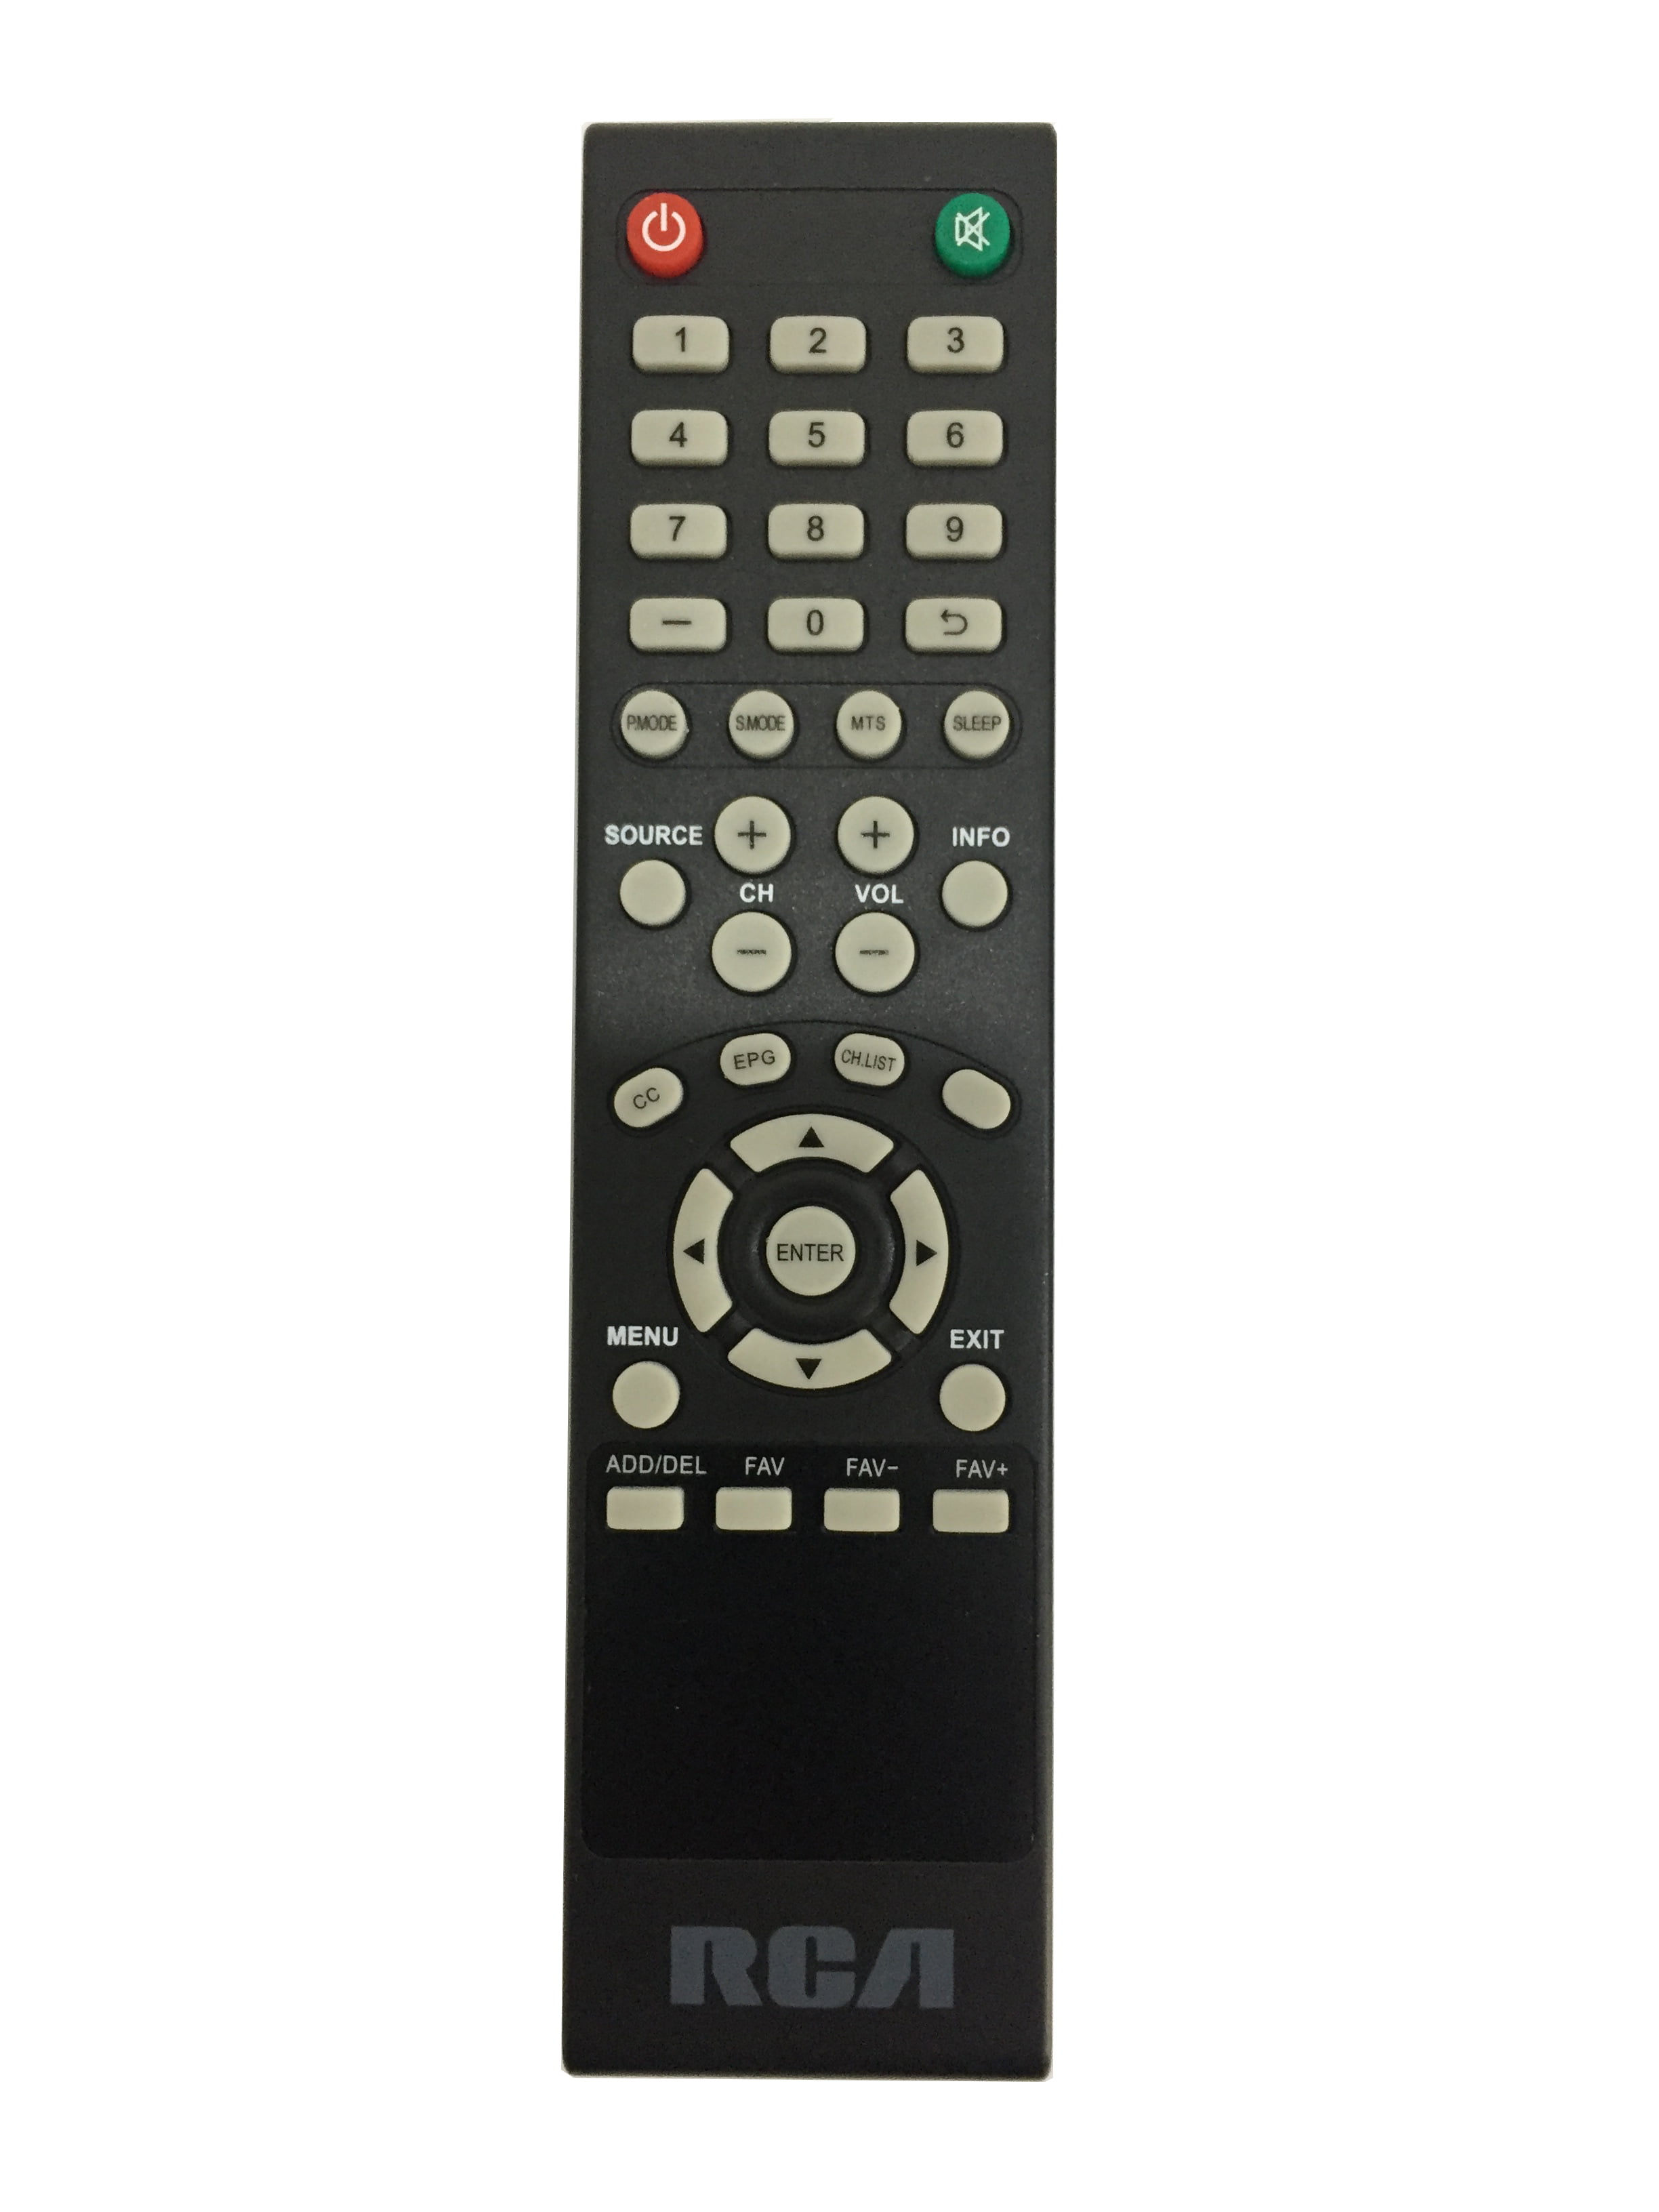 SMART LED TV RCA 32 PULGADAS HD R32AND - electronicamegatonesrl